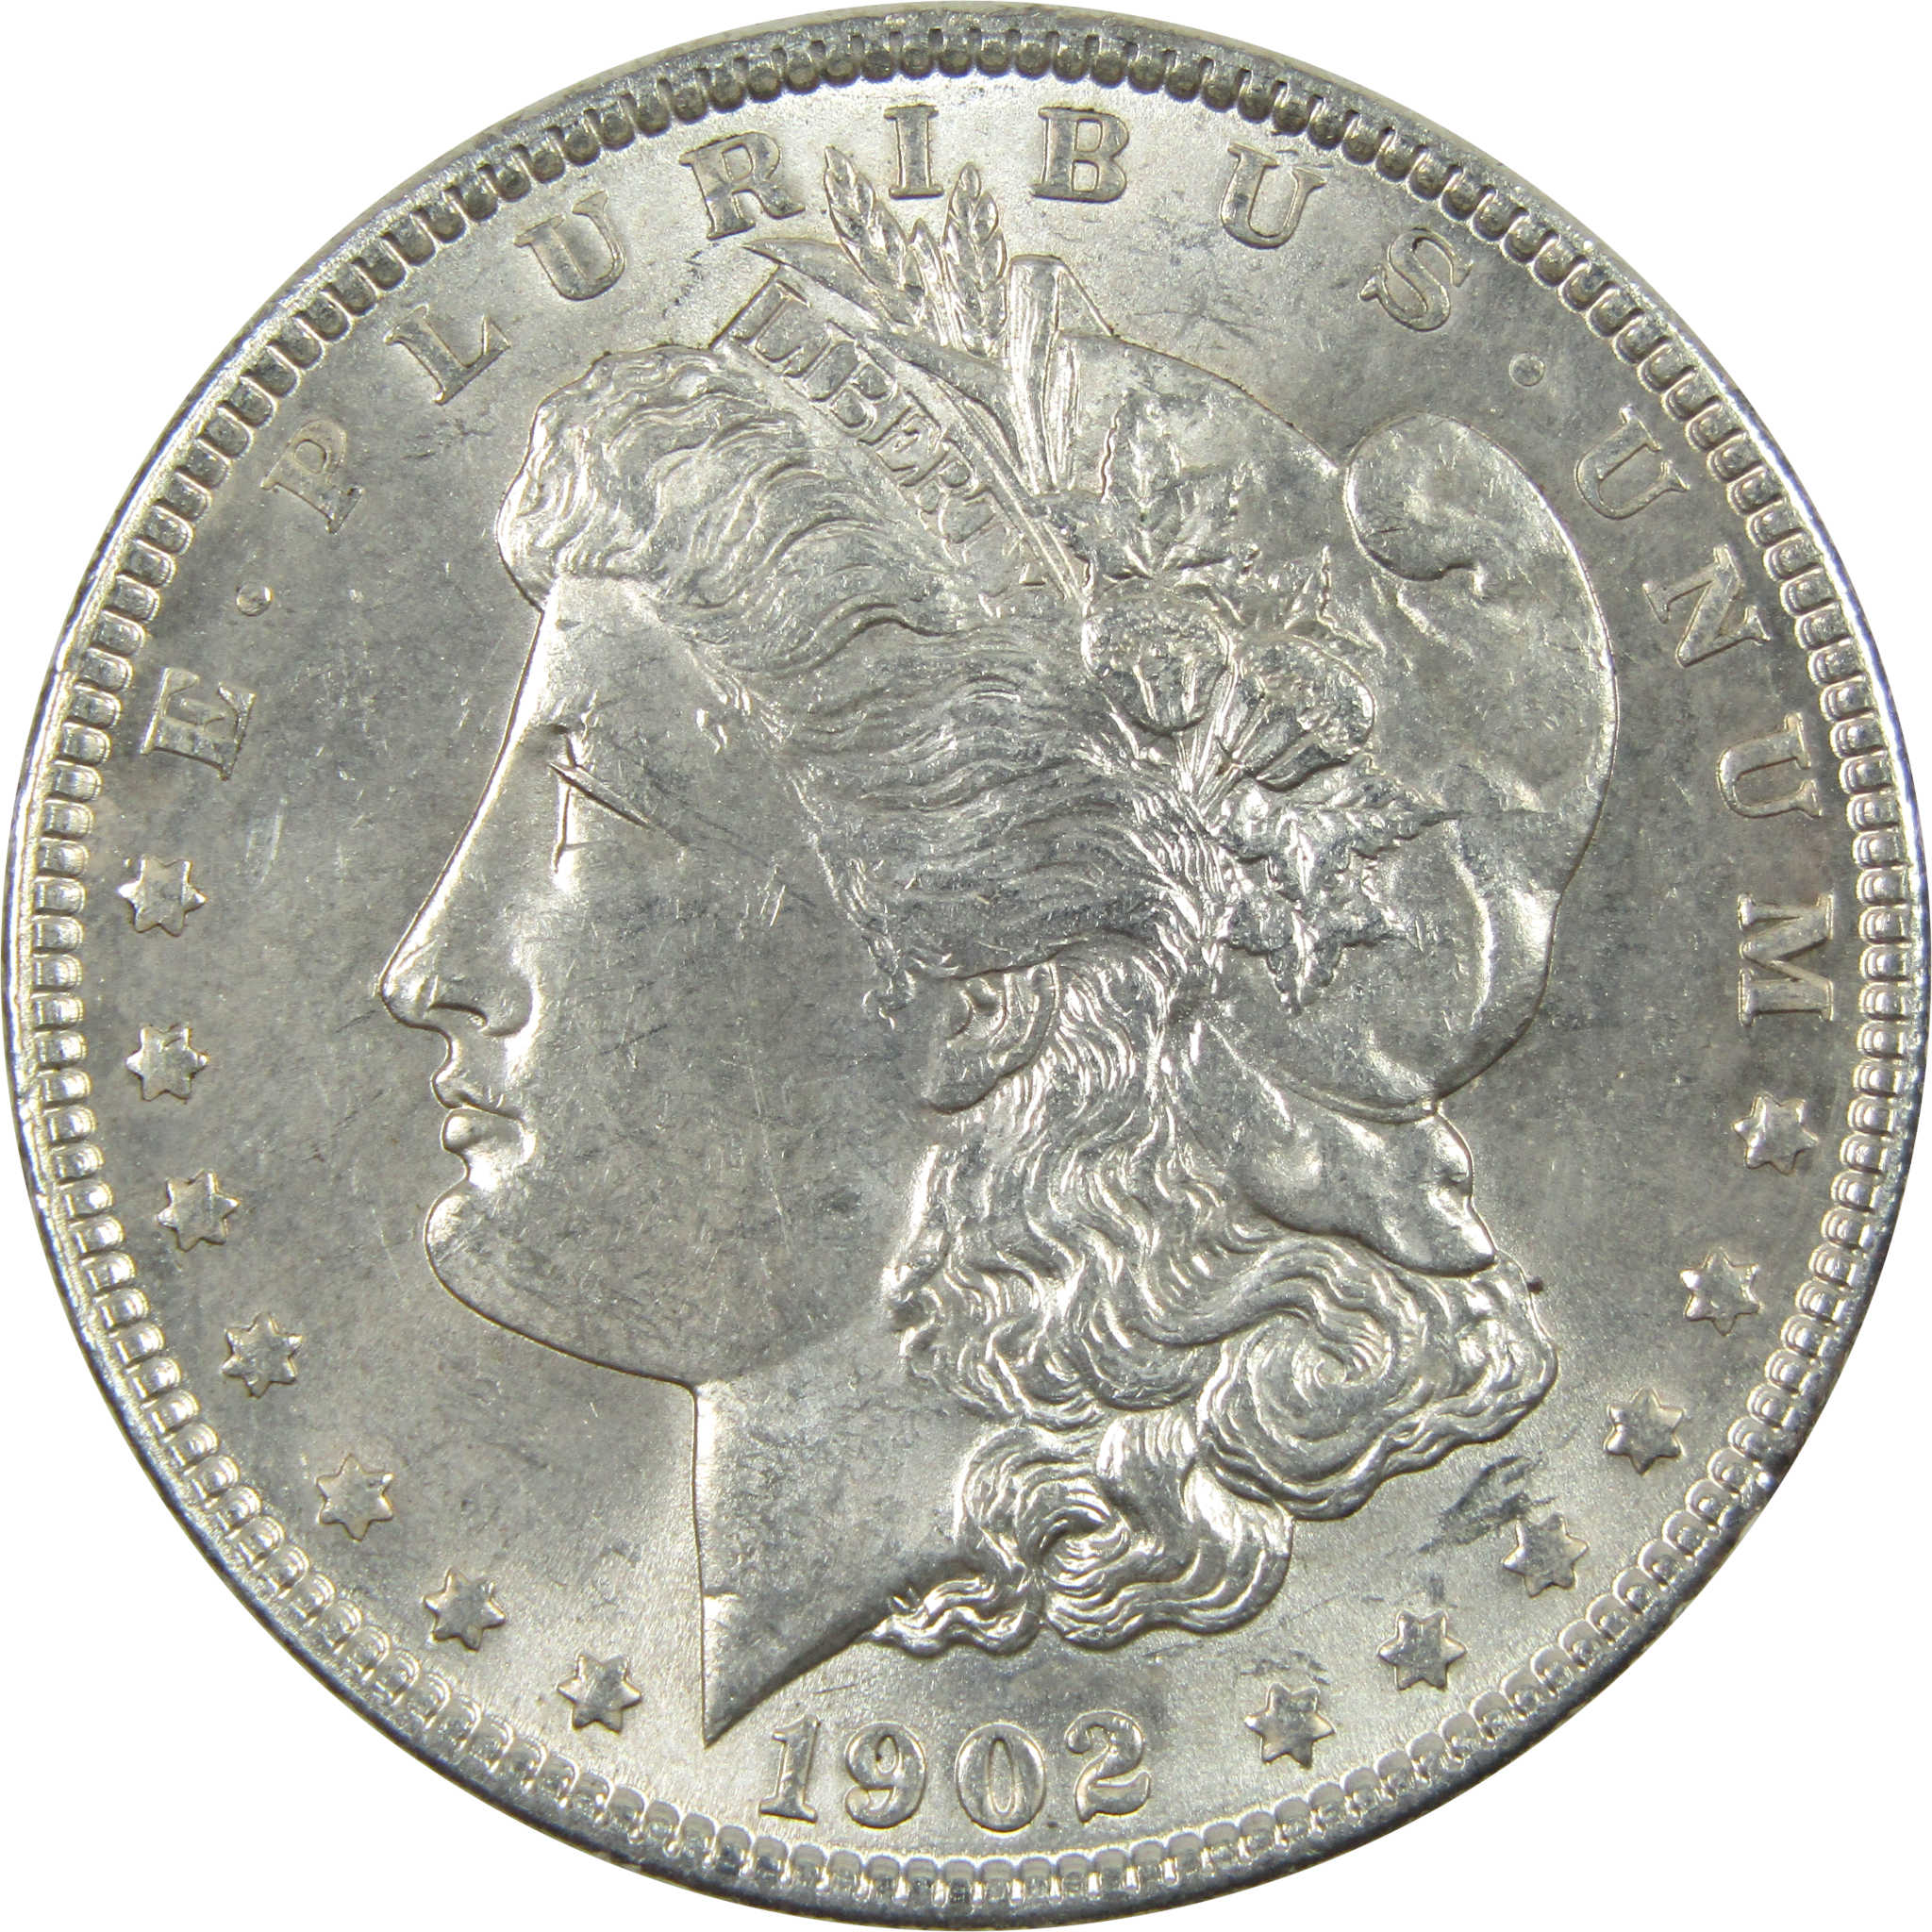 1902 Morgan Dollar Uncirculated Silver $1 Coin SKU:I14078 - Morgan coin - Morgan silver dollar - Morgan silver dollar for sale - Profile Coins &amp; Collectibles